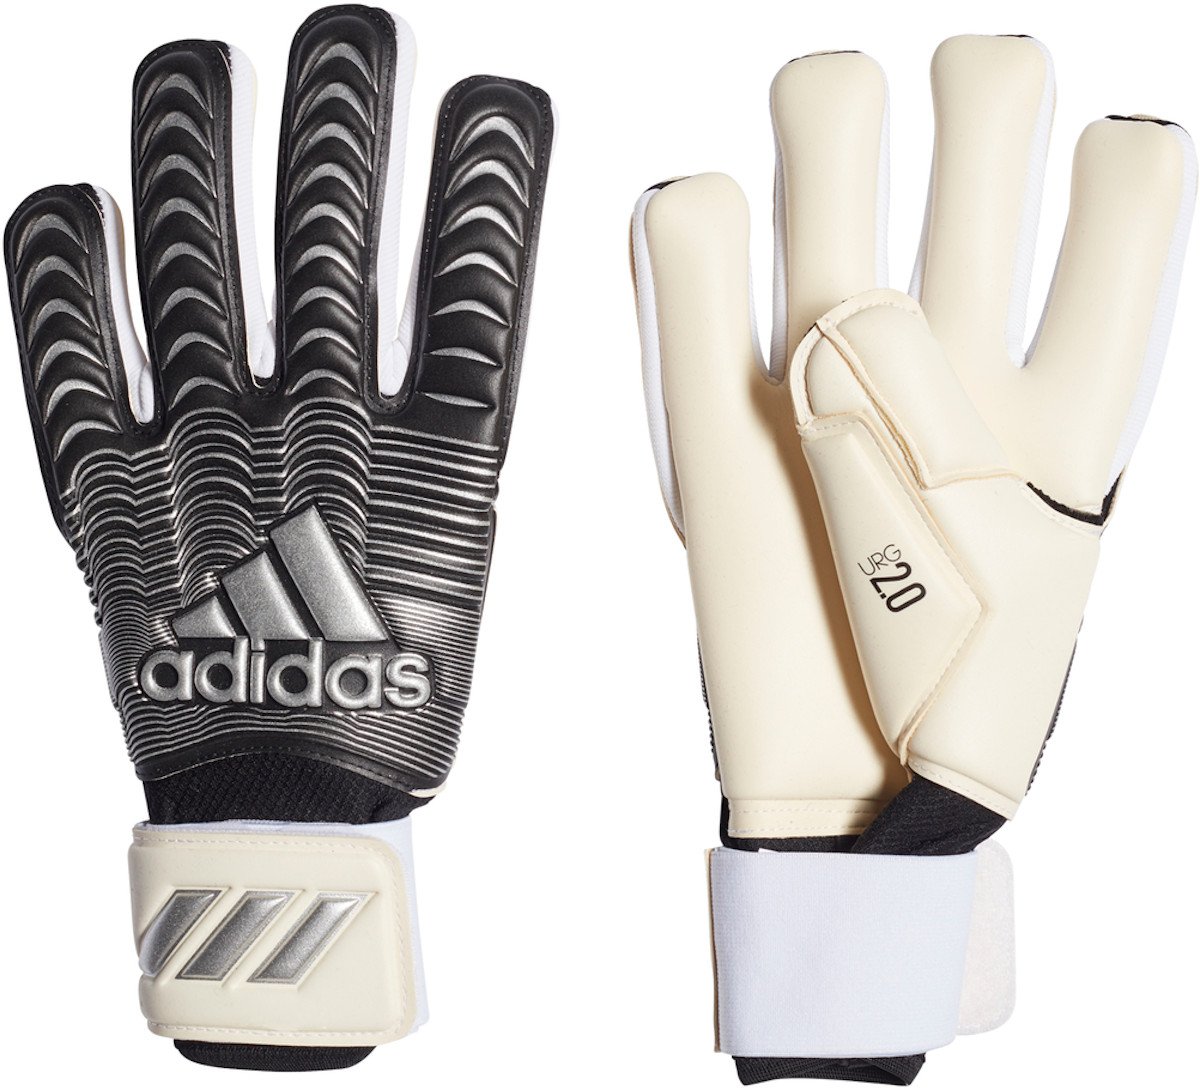 Goalkeeper's gloves adidas CLASSIC PRO